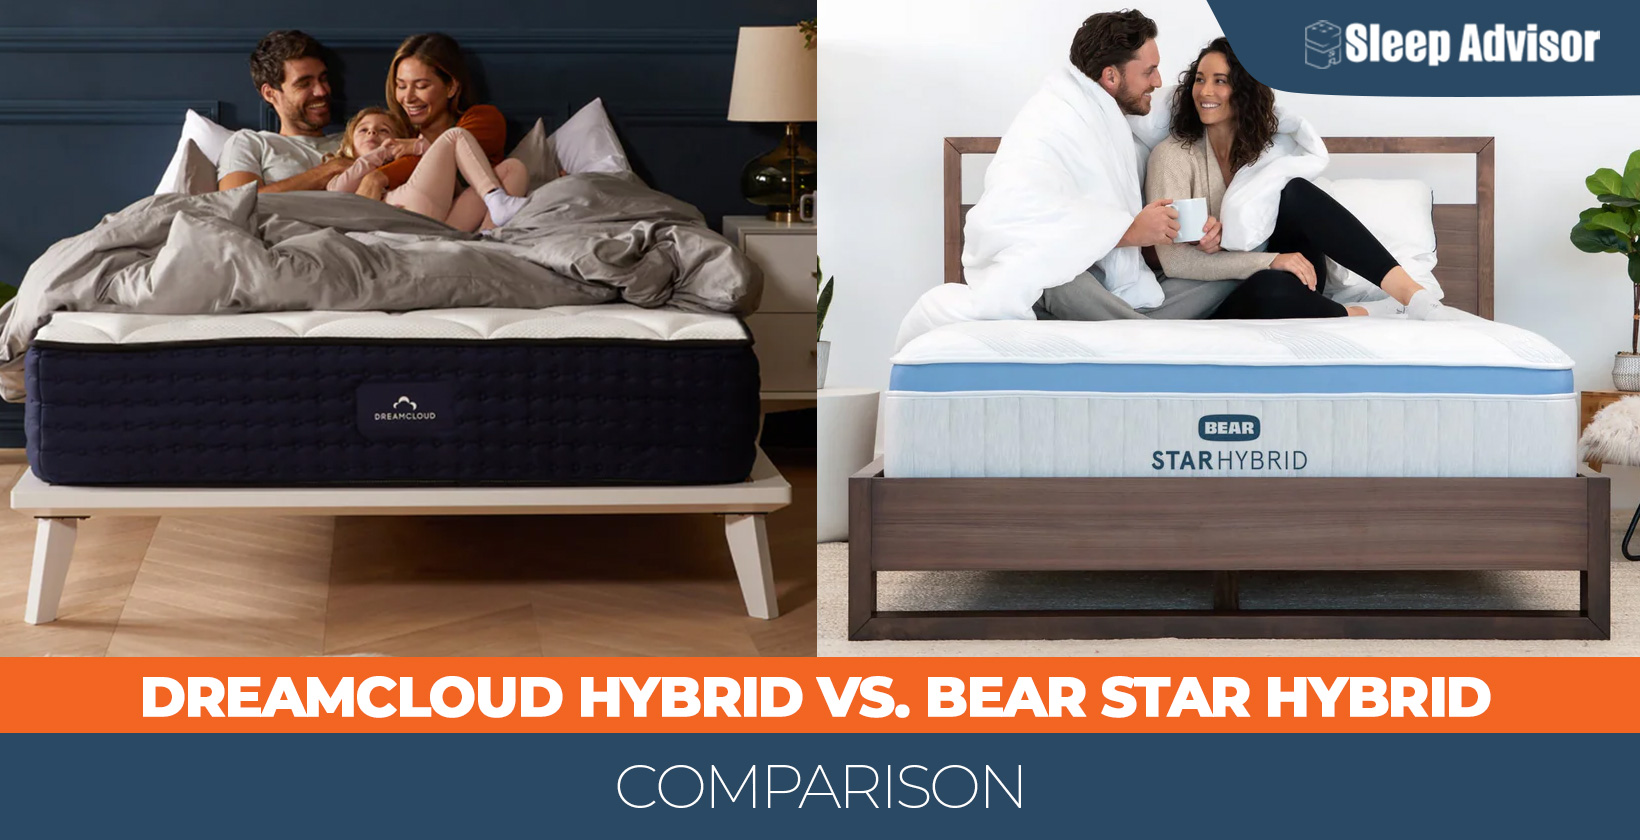 Our in depth comparison for DreamCloud Hybrid versus Bear Star Hybrid